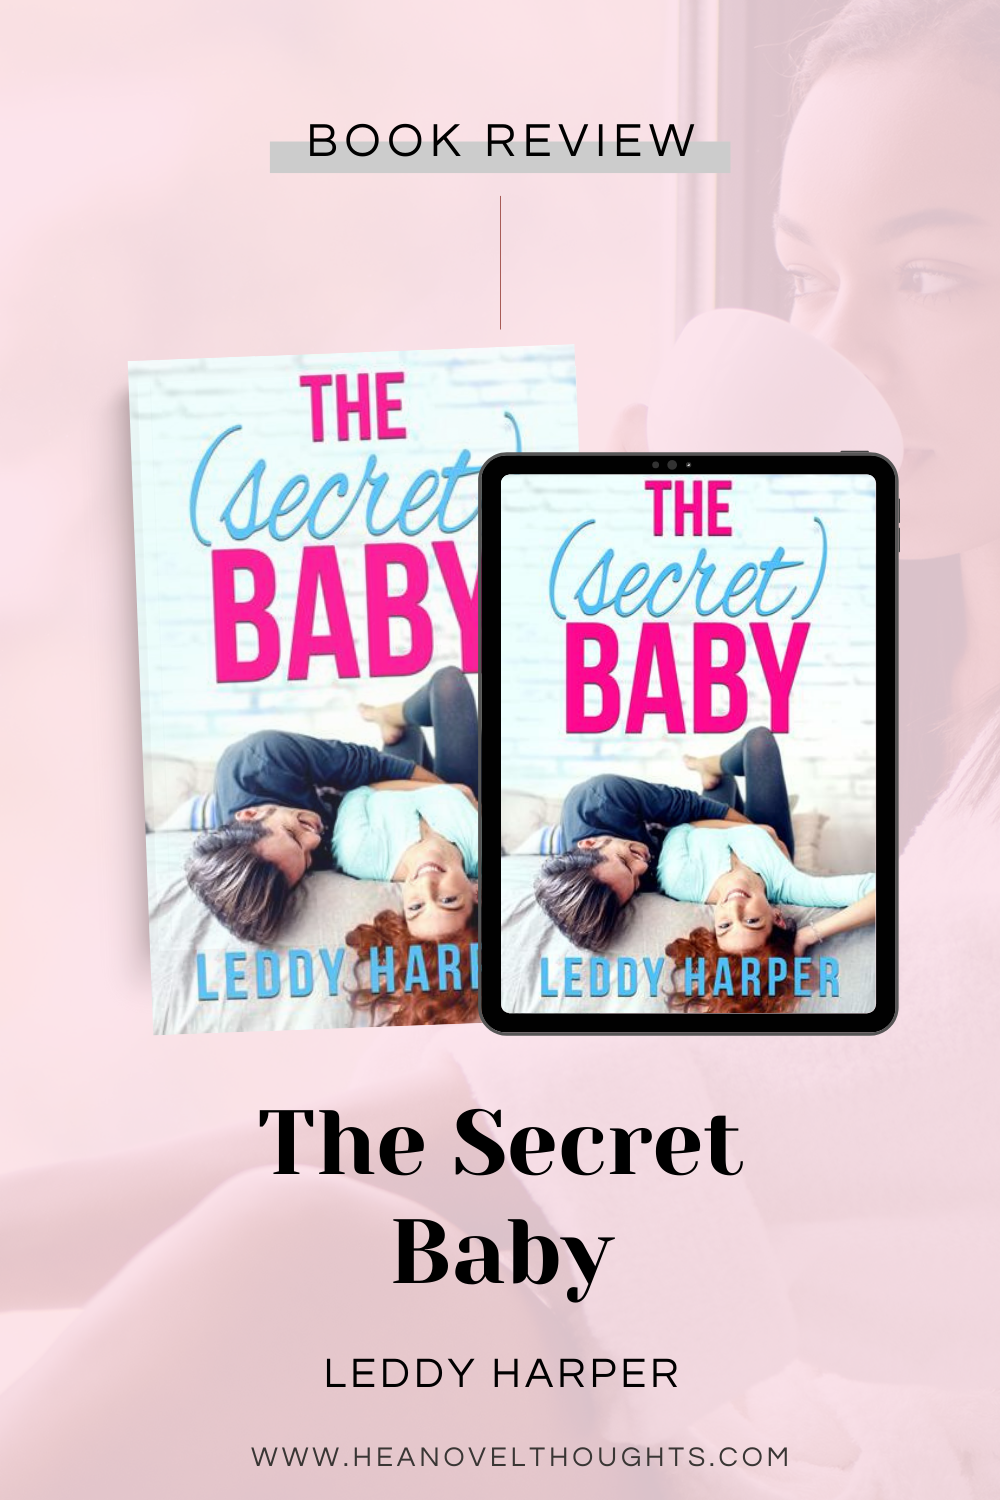 The Secret Baby by Leddy Harper